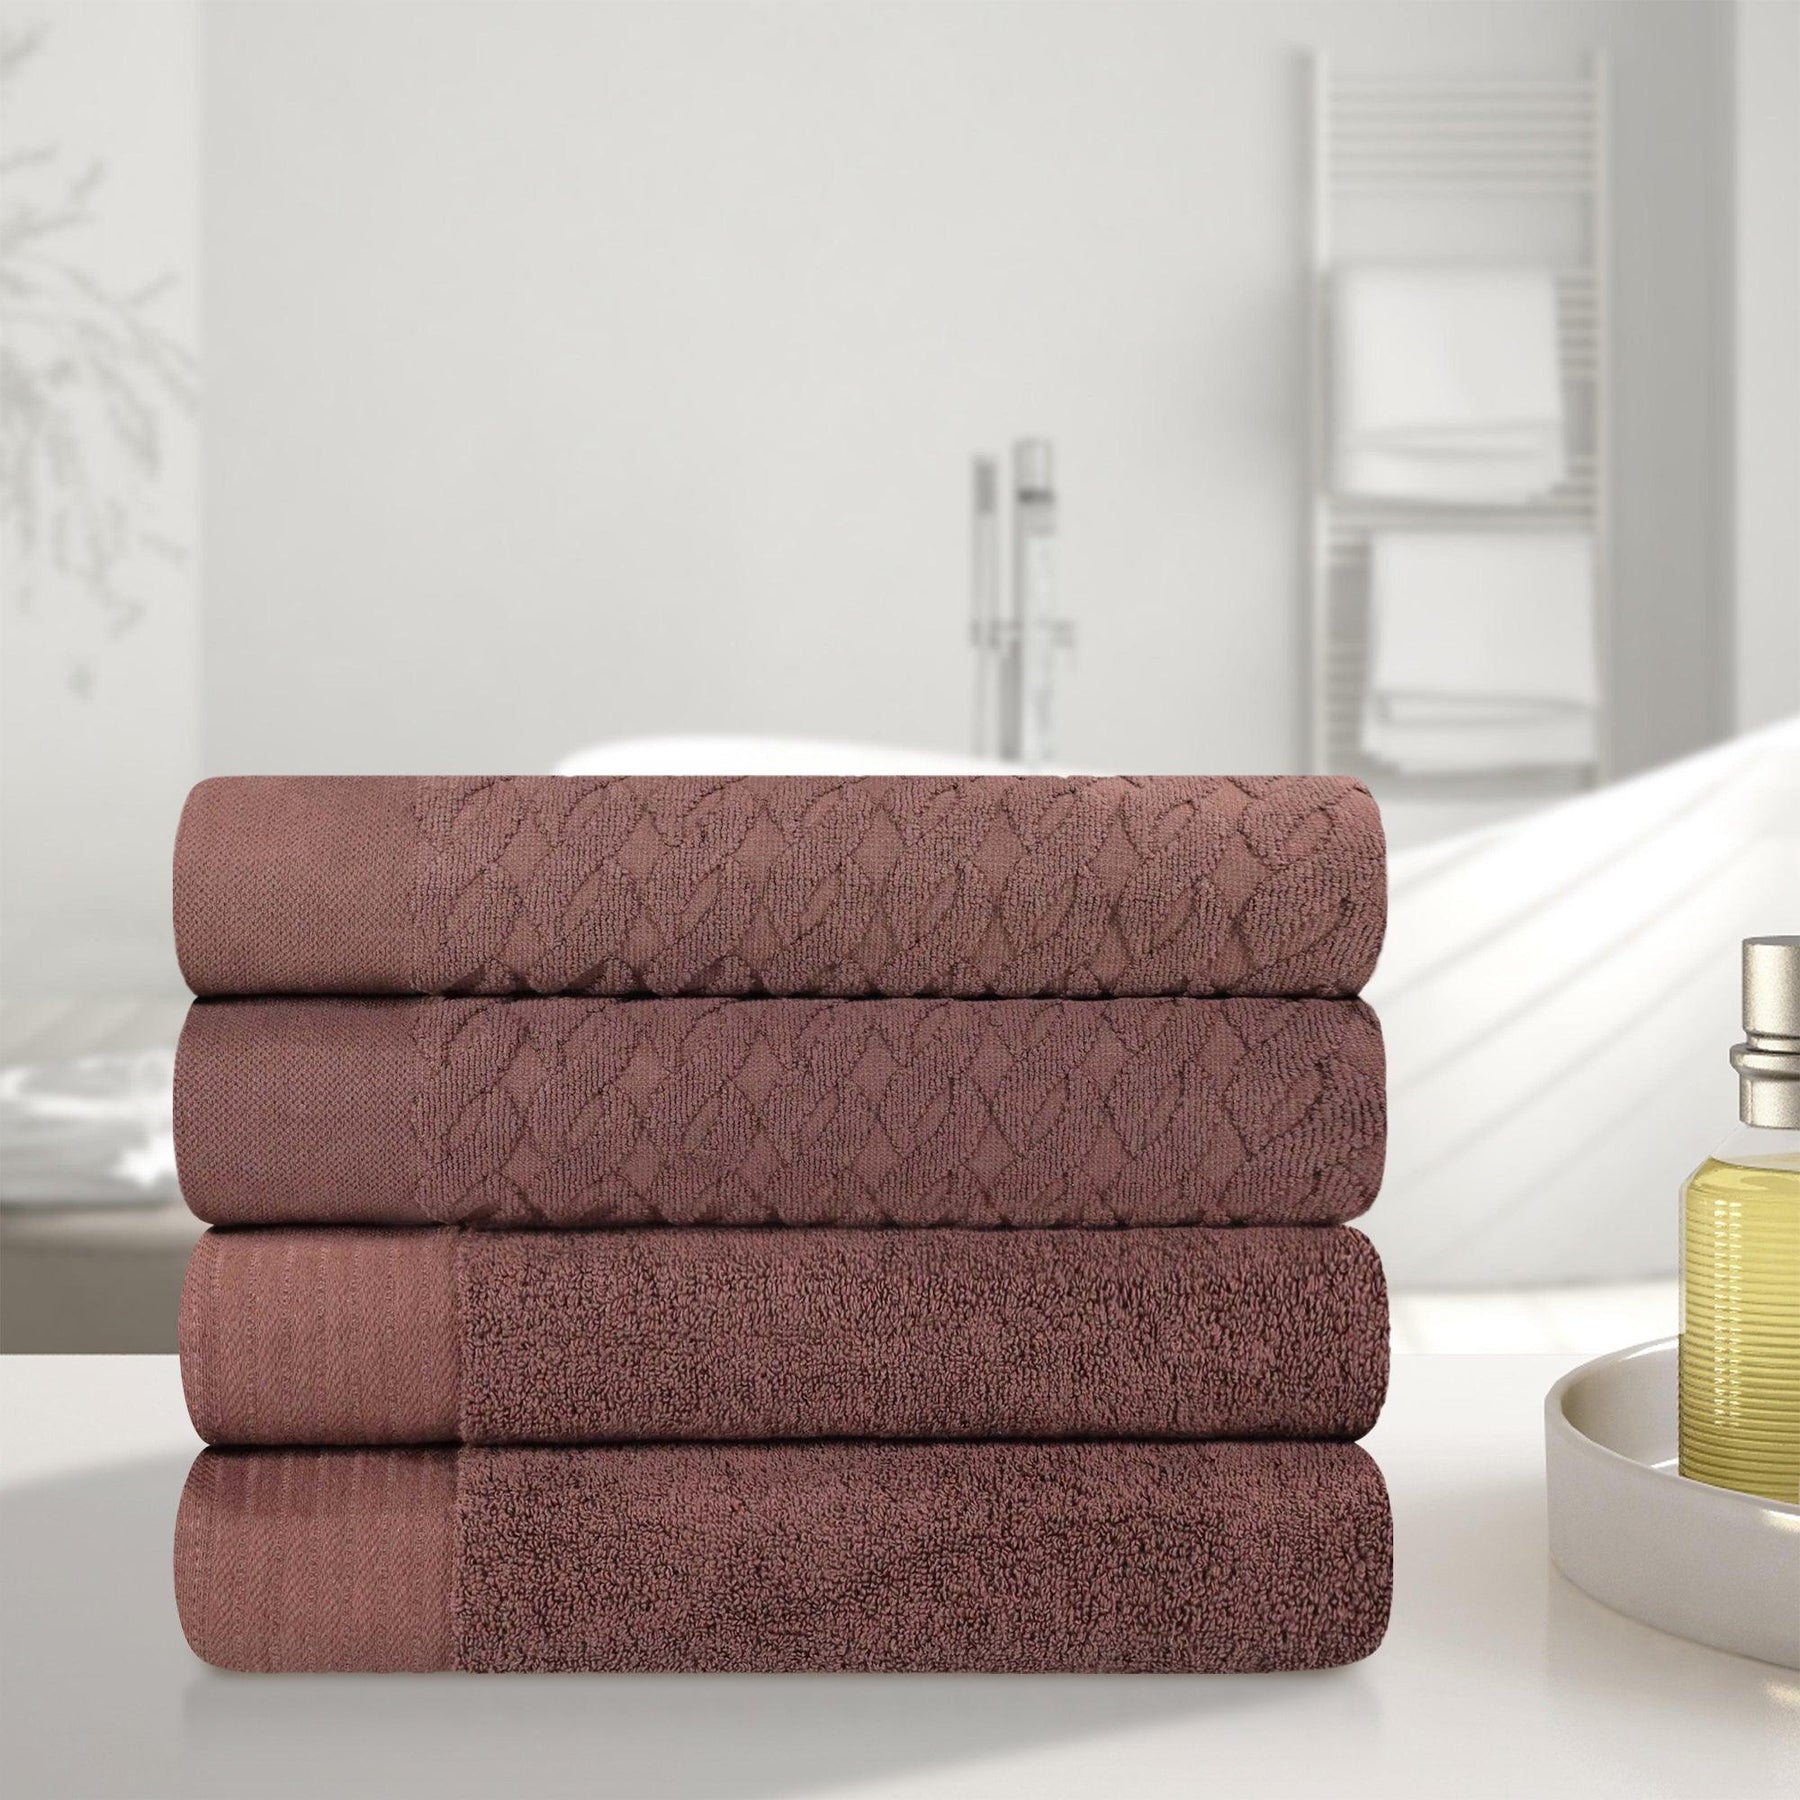 Premium Turkish Cotton Jacquard Herringbone and Solid 4-Piece Bath Towel Set -  Chocolate